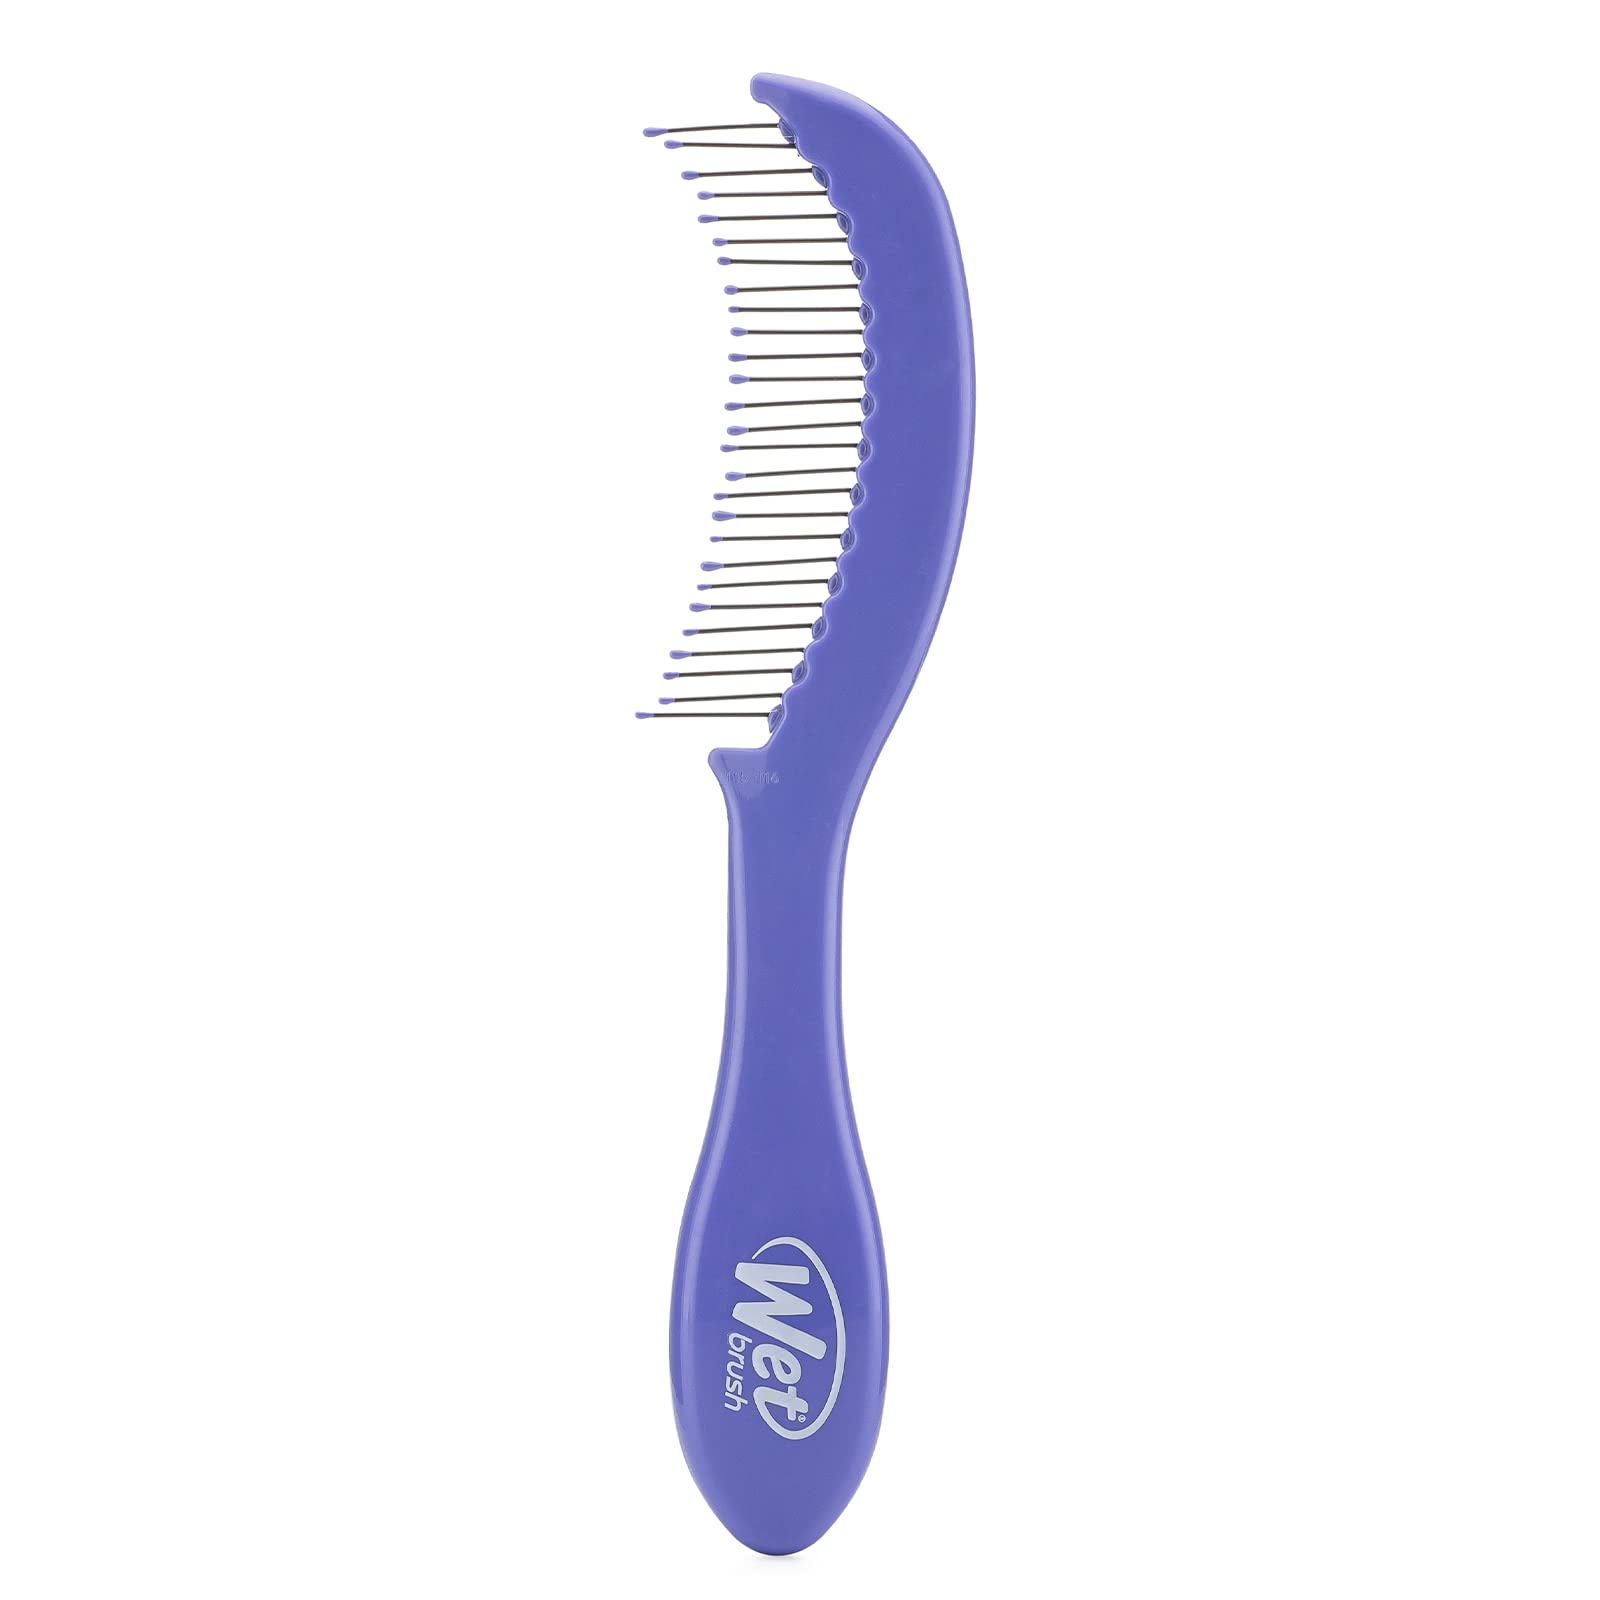 Wet Brush Thin Detangler Comb - Purple, Custom Care - All Hair Types - Ultra-Soft IntelliFlex Bristles Glide Through Tangles with Ease - Pain-Free Comb for Men, Women, Boys and Girls